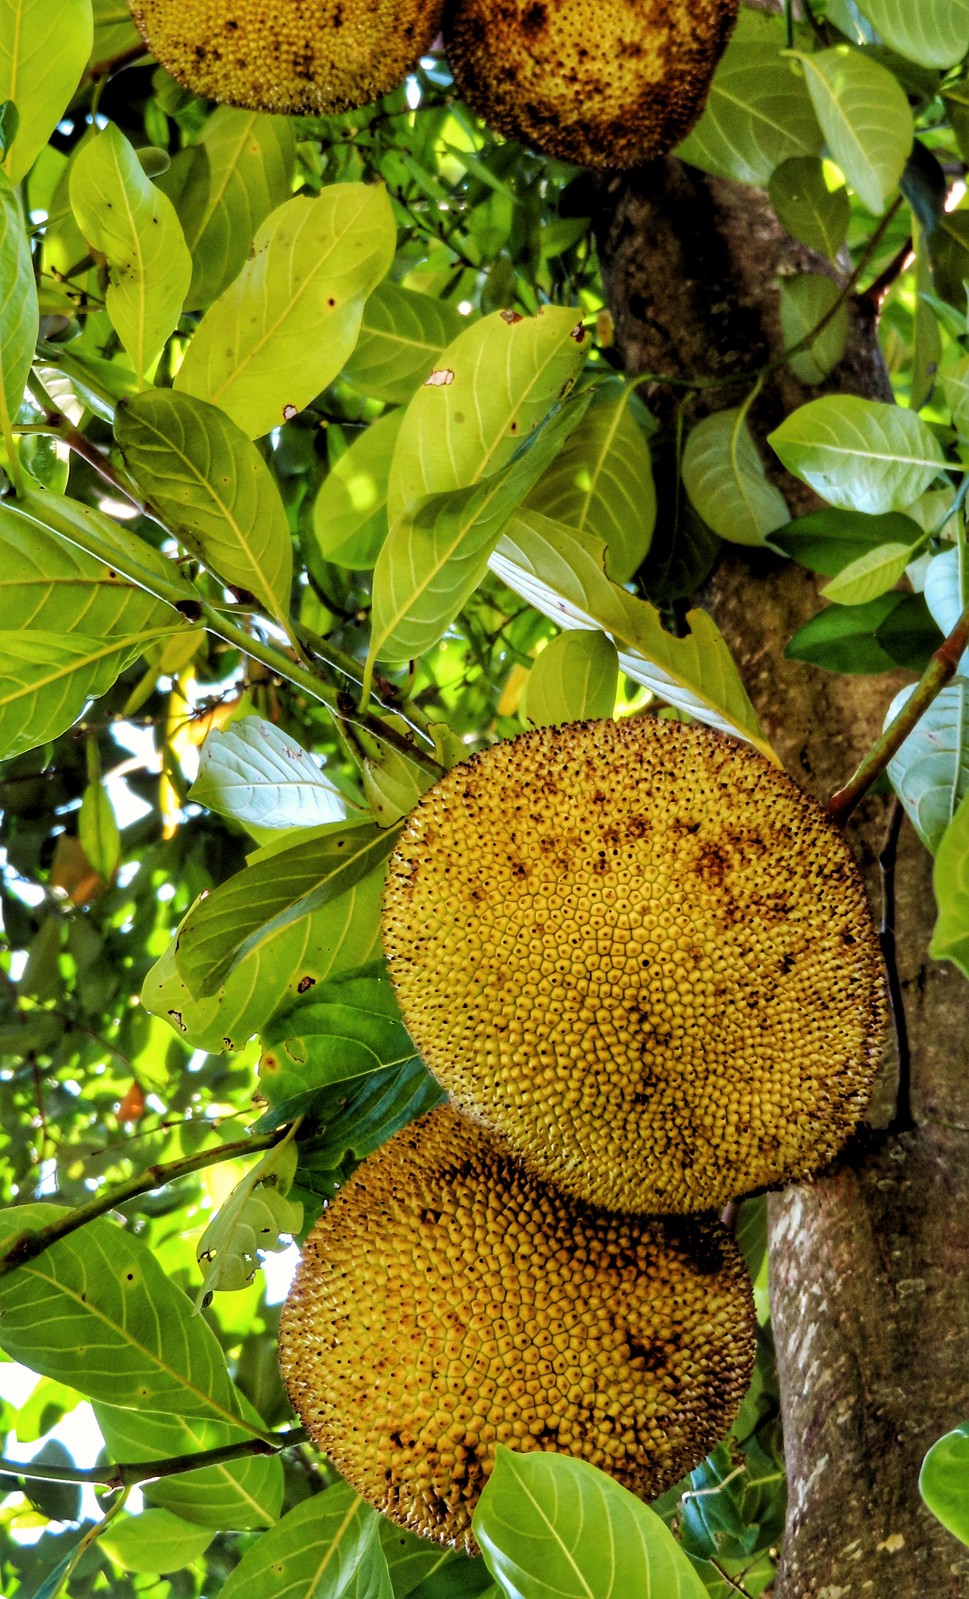 Some High-Up Jackfruit